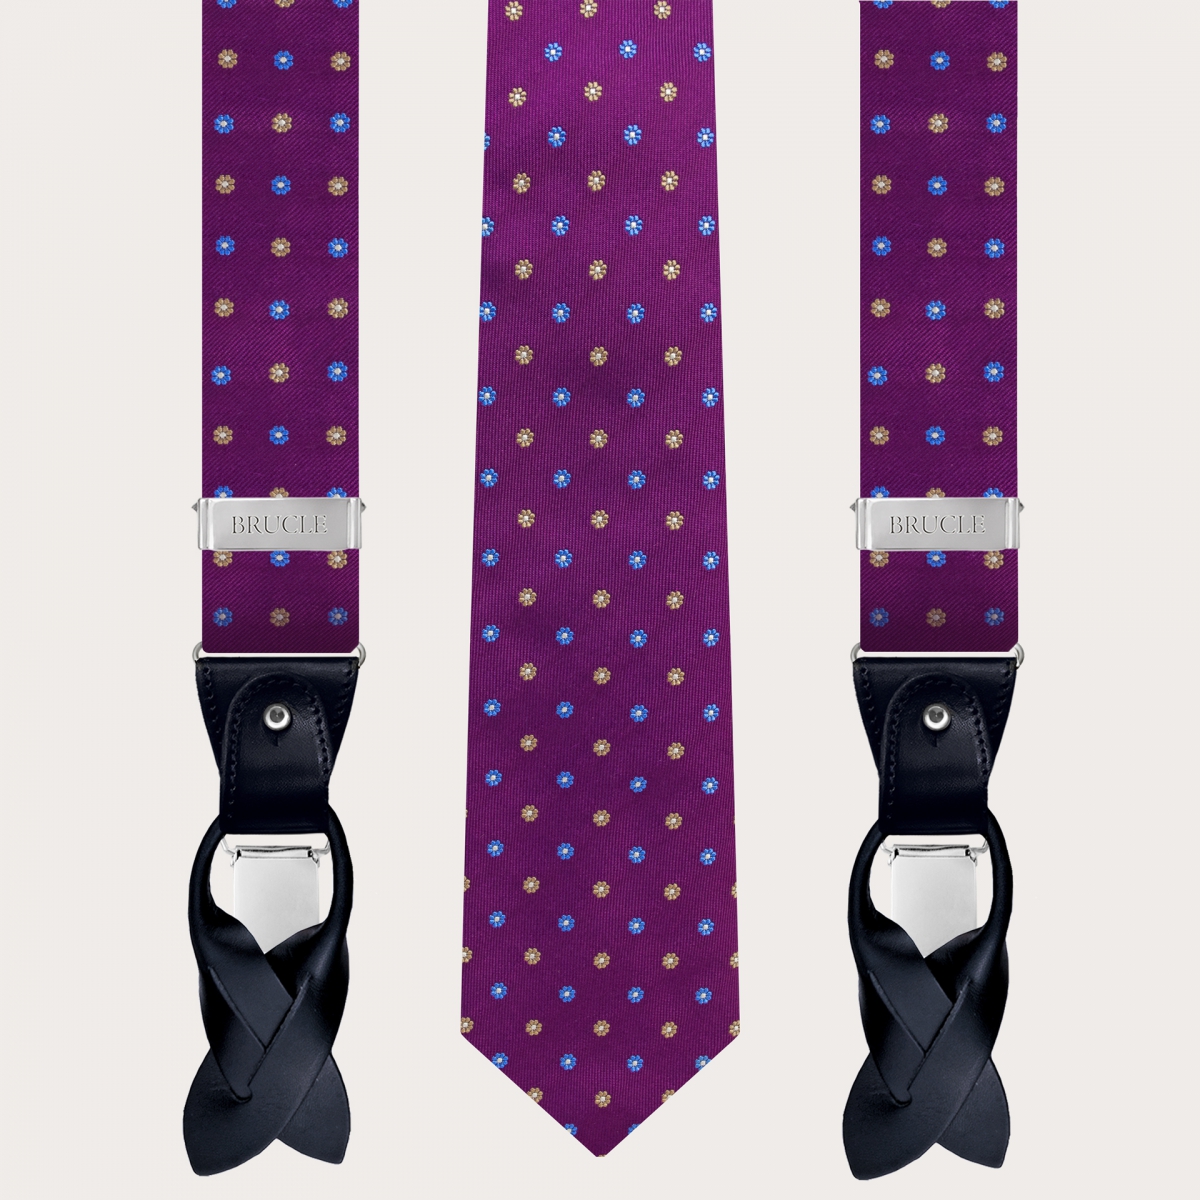 BRUCLE Abgestimmte Hosenträger und Krawatte violett florale aus Seide jacquard